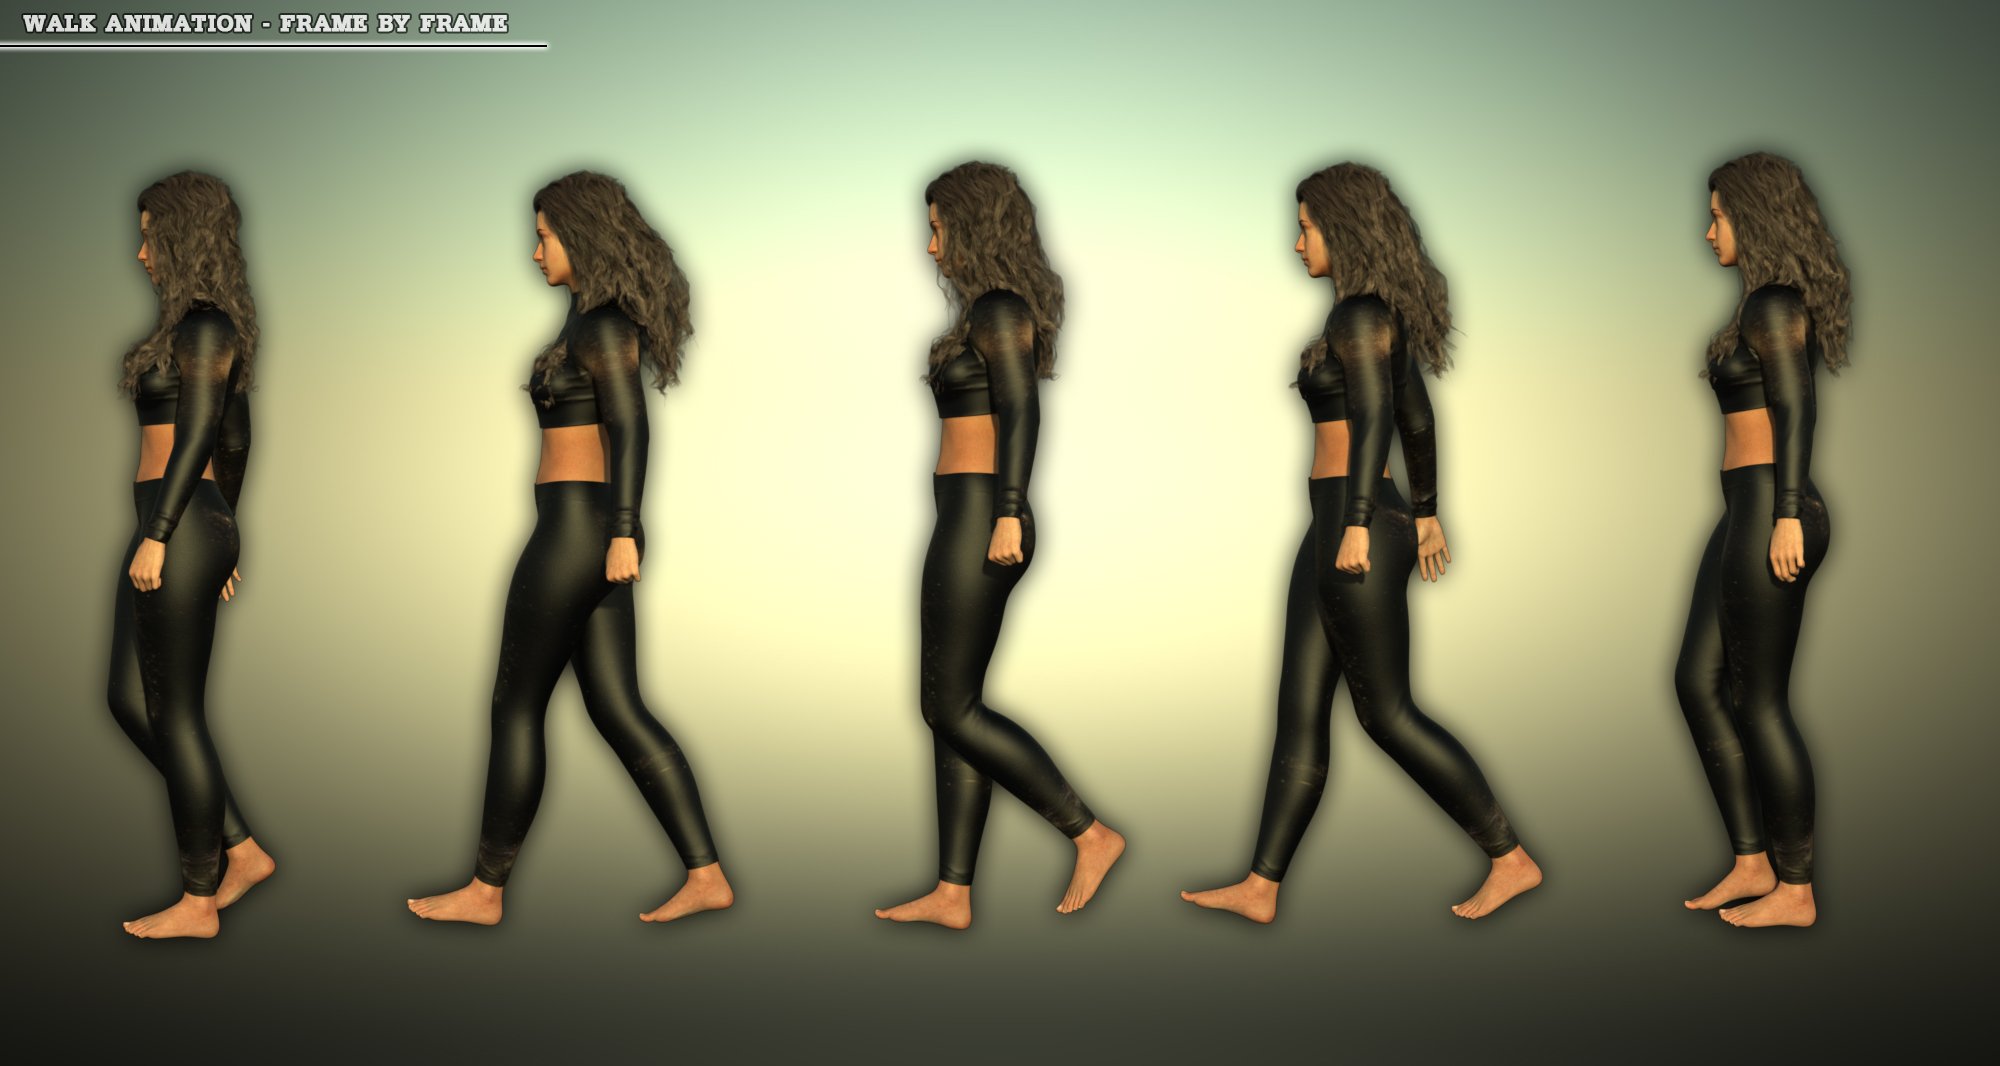 dForce Master - Hair Simulation Presets for dForce Cloth Engine by: EcVh0, 3D Models by Daz 3D